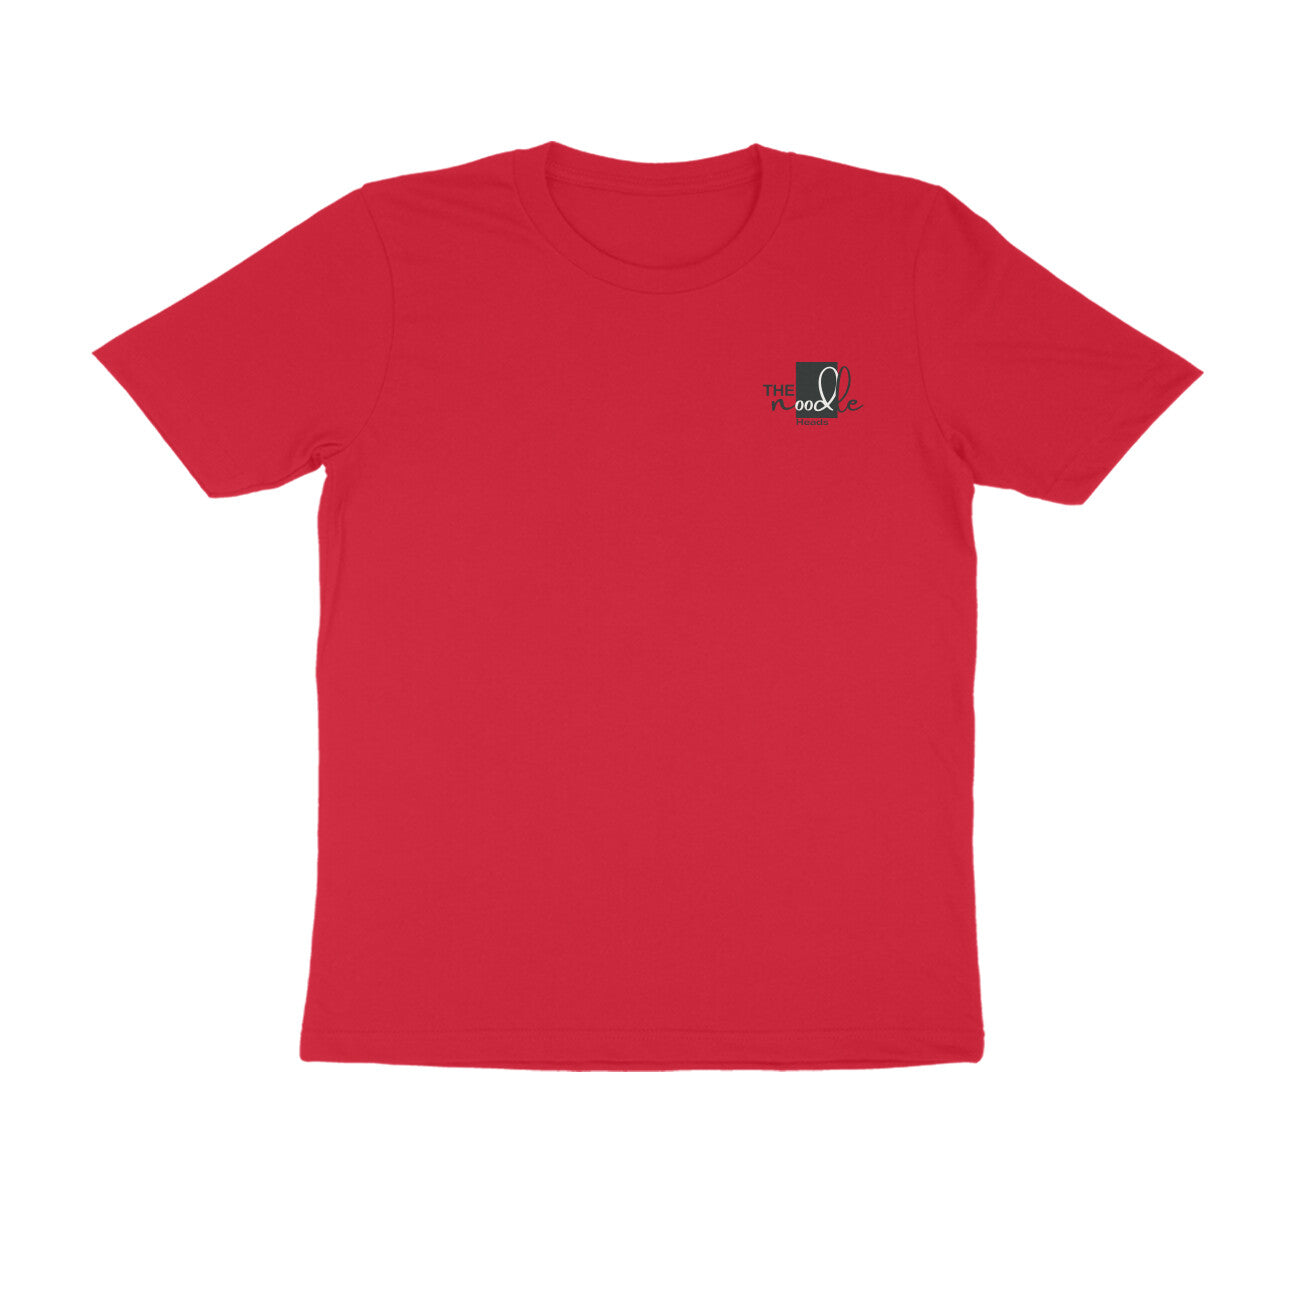 Men's Red Tshirt - TNH (Red)